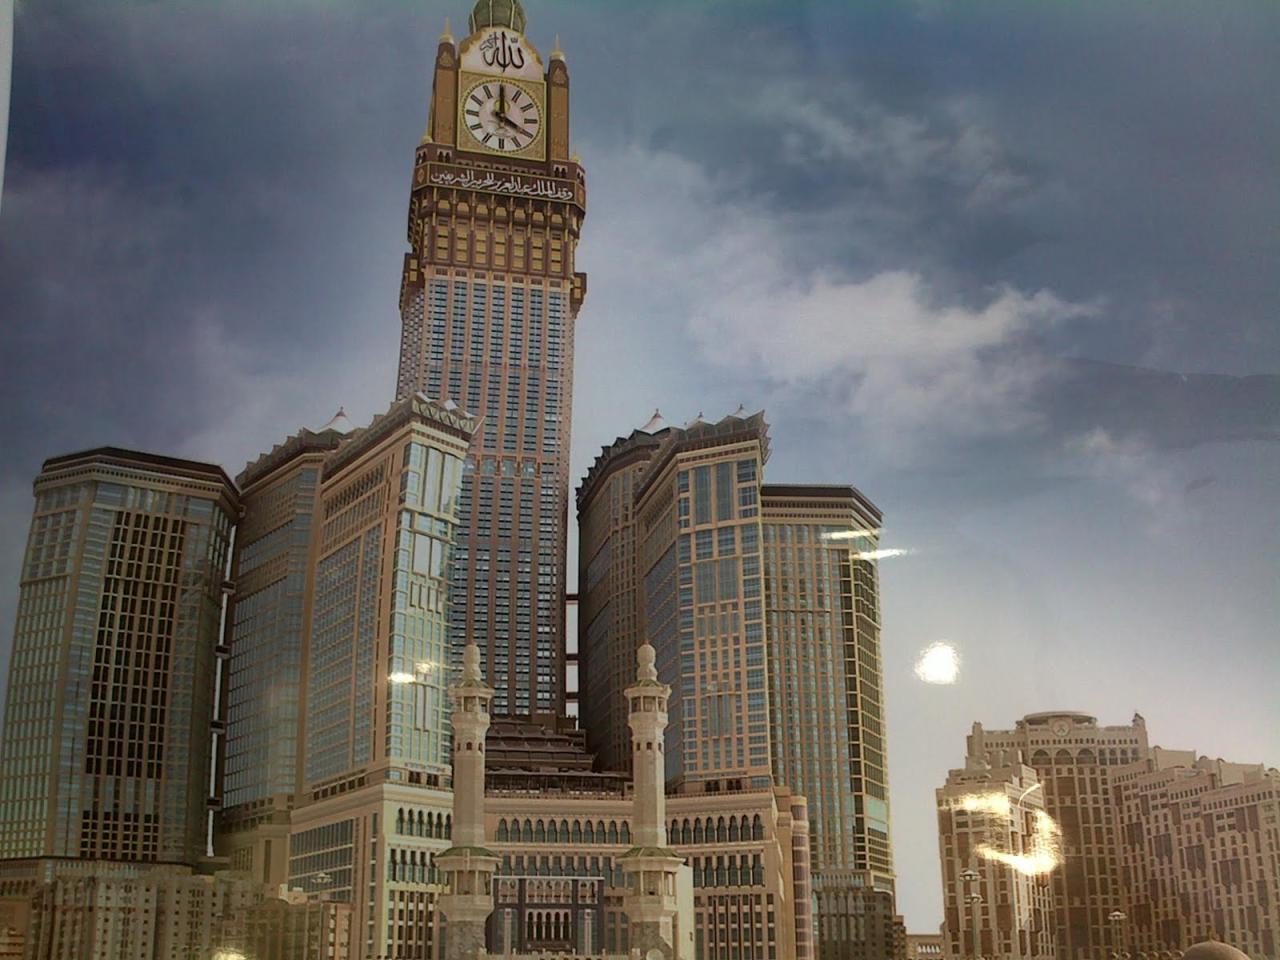 Makkah hilton towers